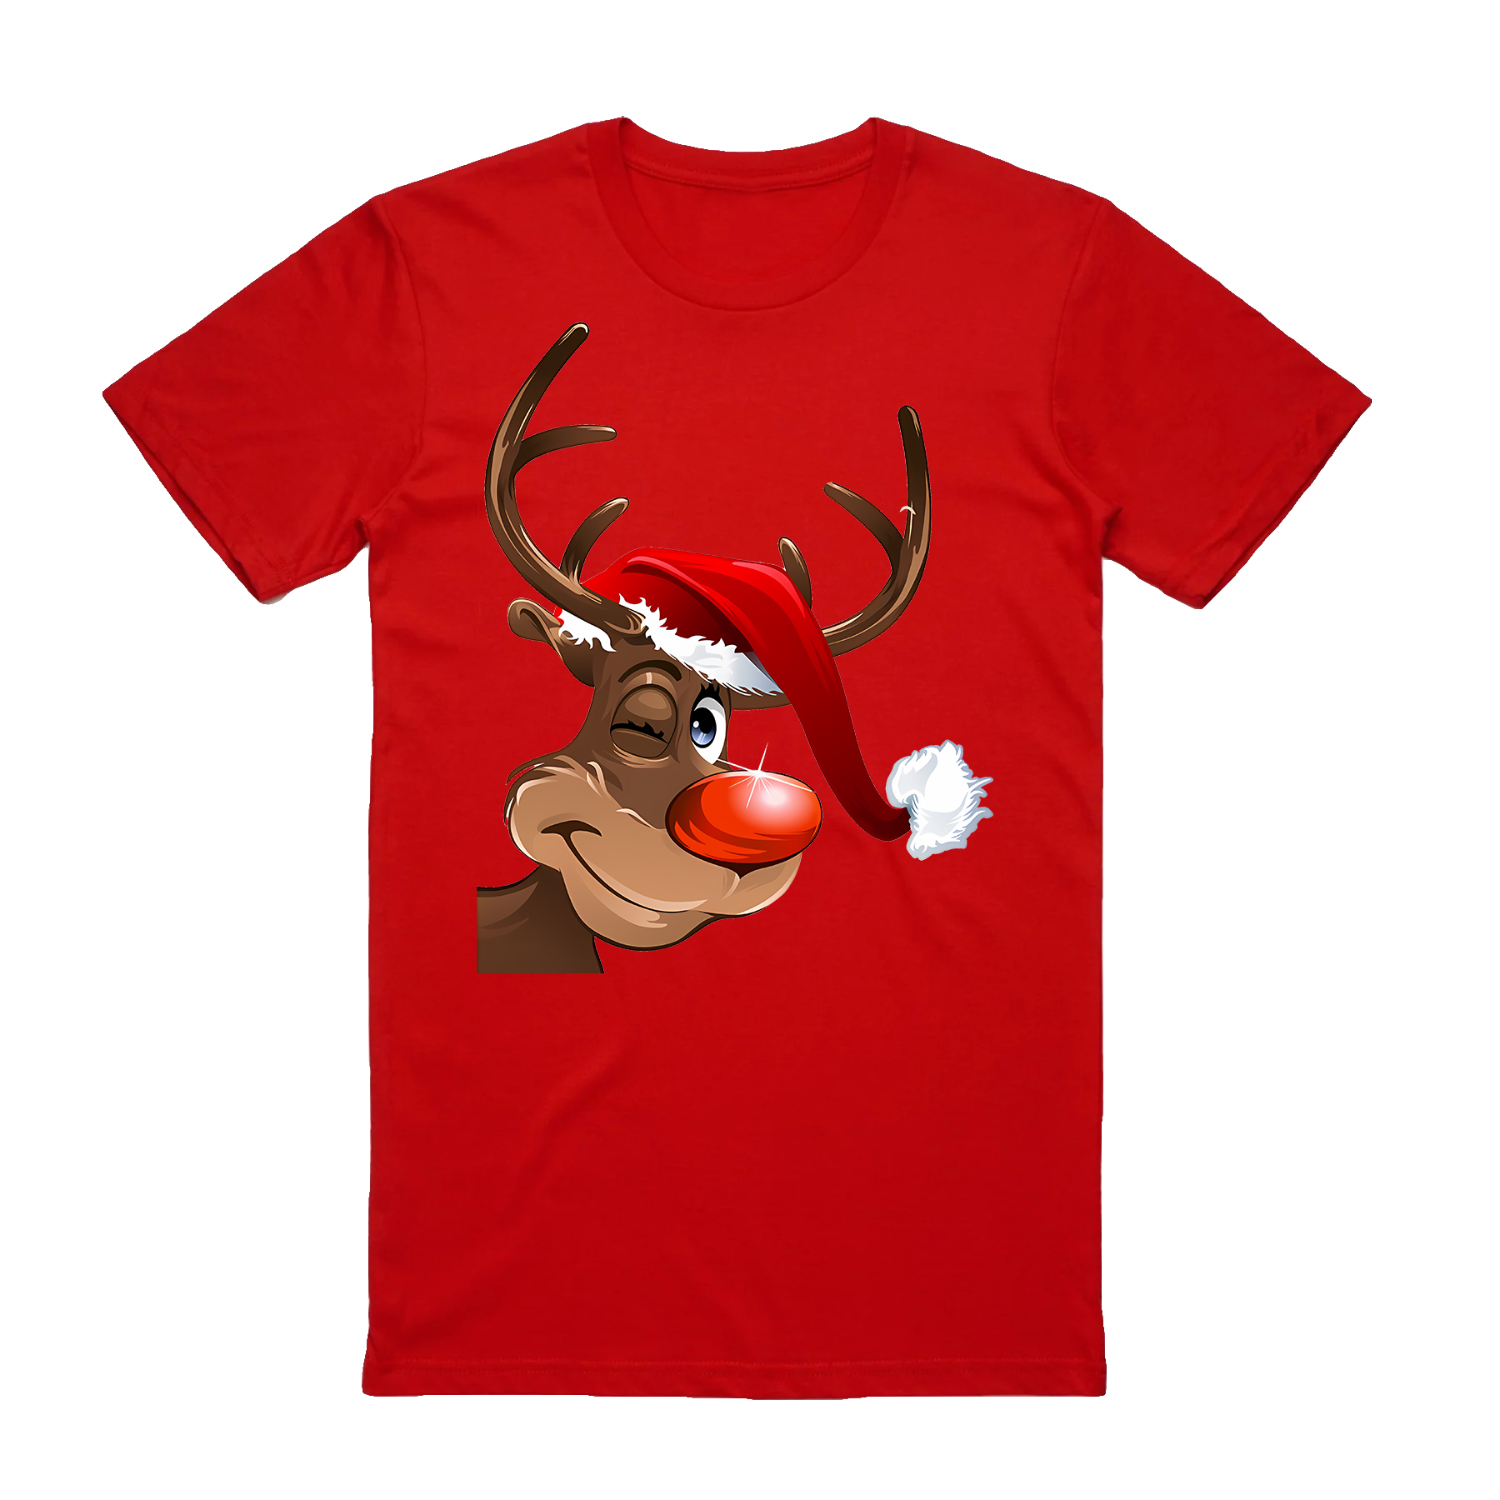 100% Cotton Christmas T-shirt Adult Unisex Tee Tops - Reindeer Wink